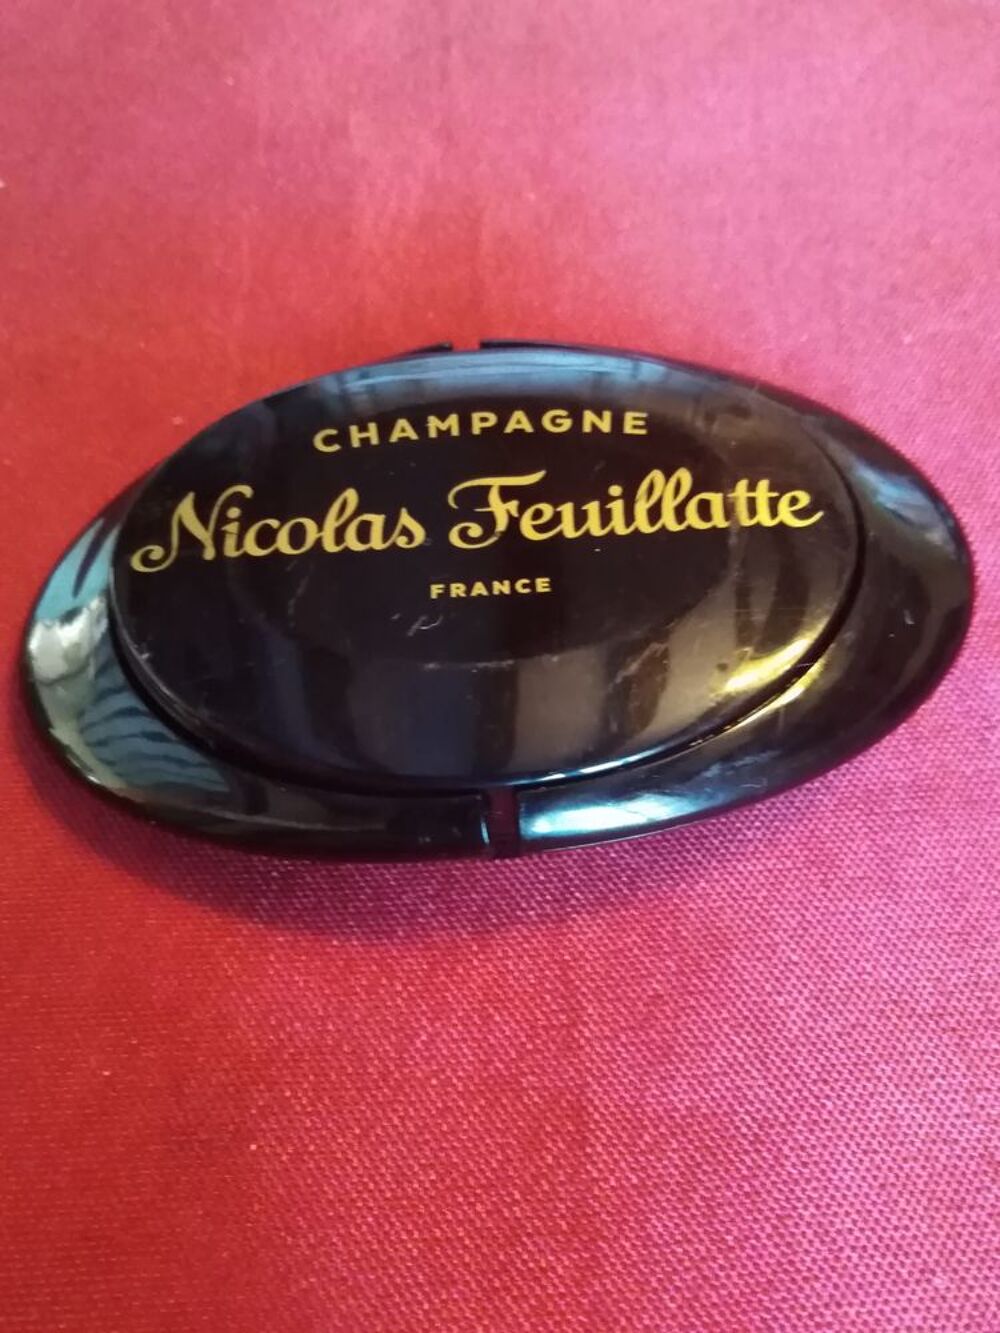 bouche bouteille champagne Nicolas feuillate france Cuisine